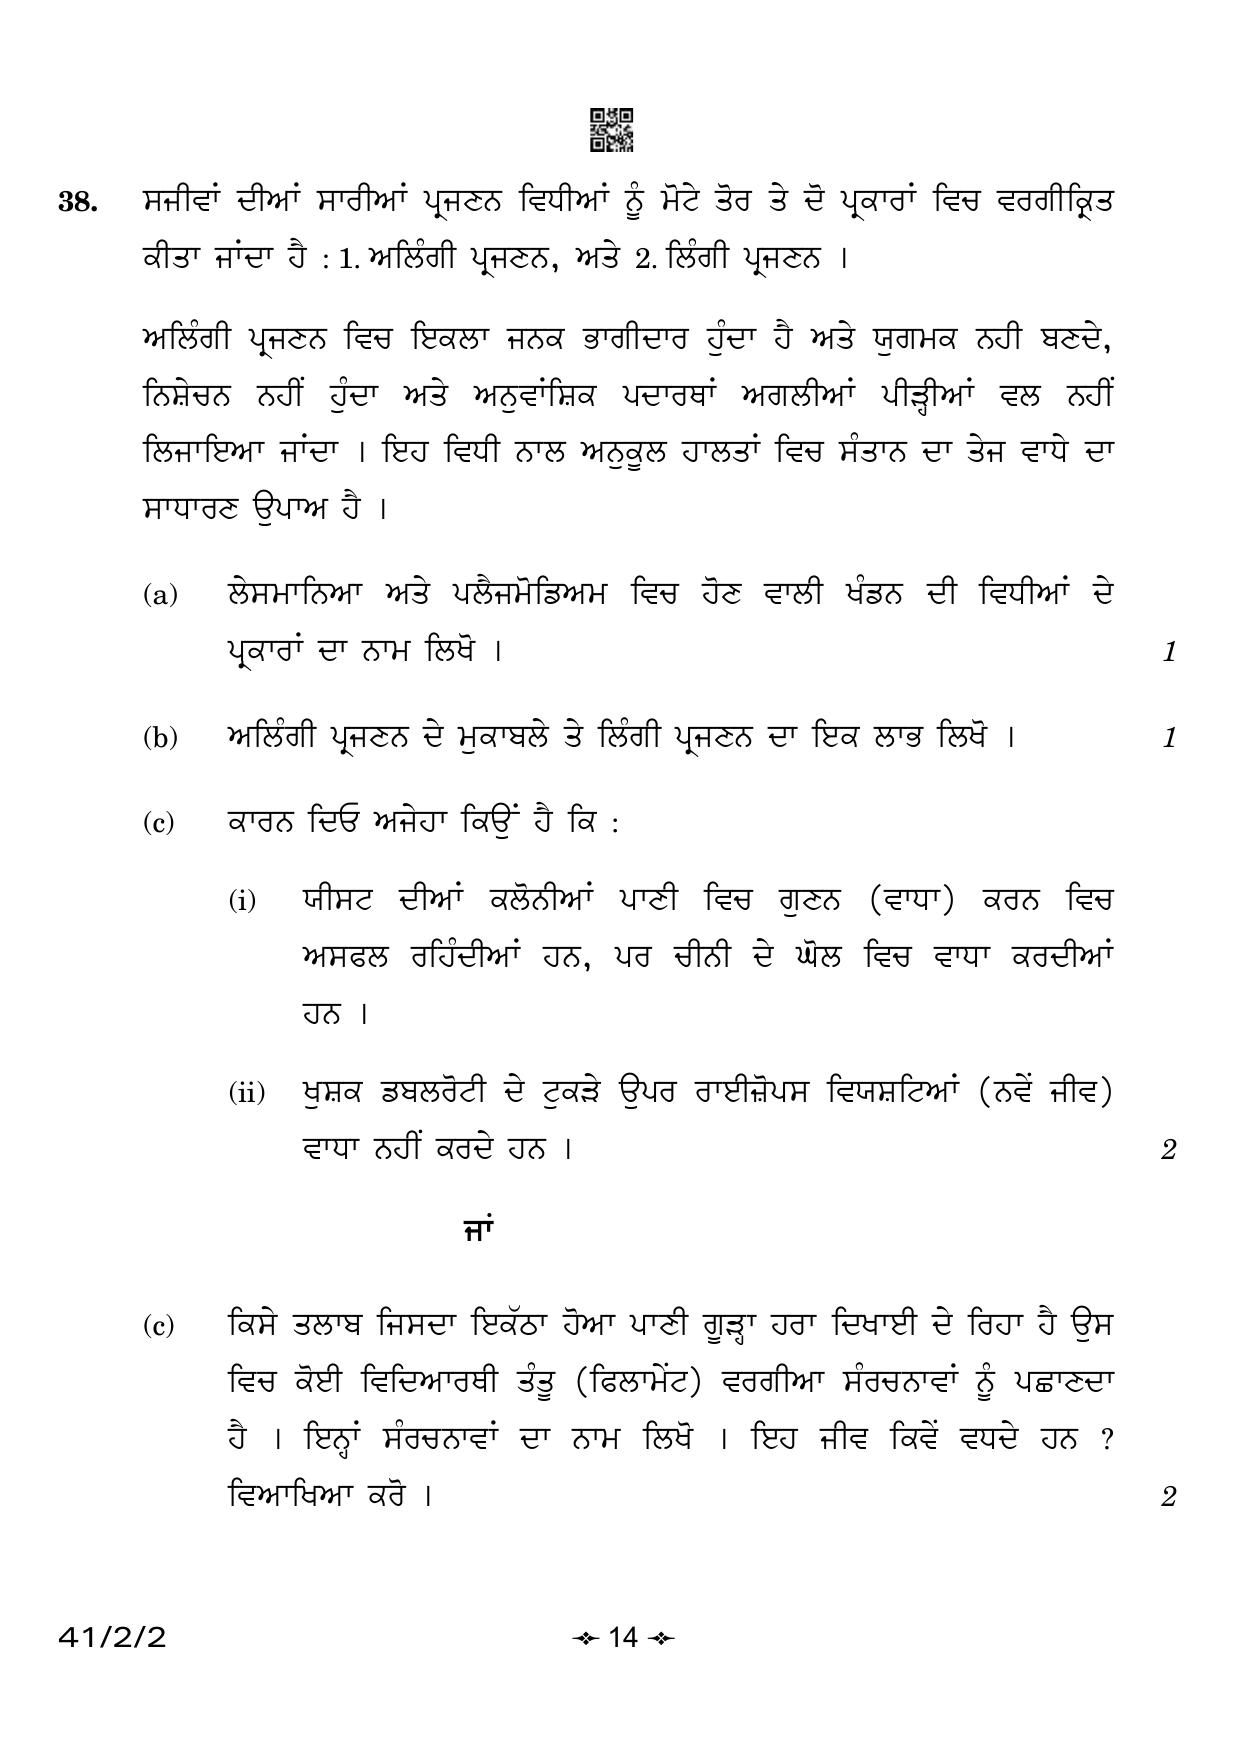 CBSE Class 10 41-2-2 Science Punjabi Version 2023 Question Paper - Page 14